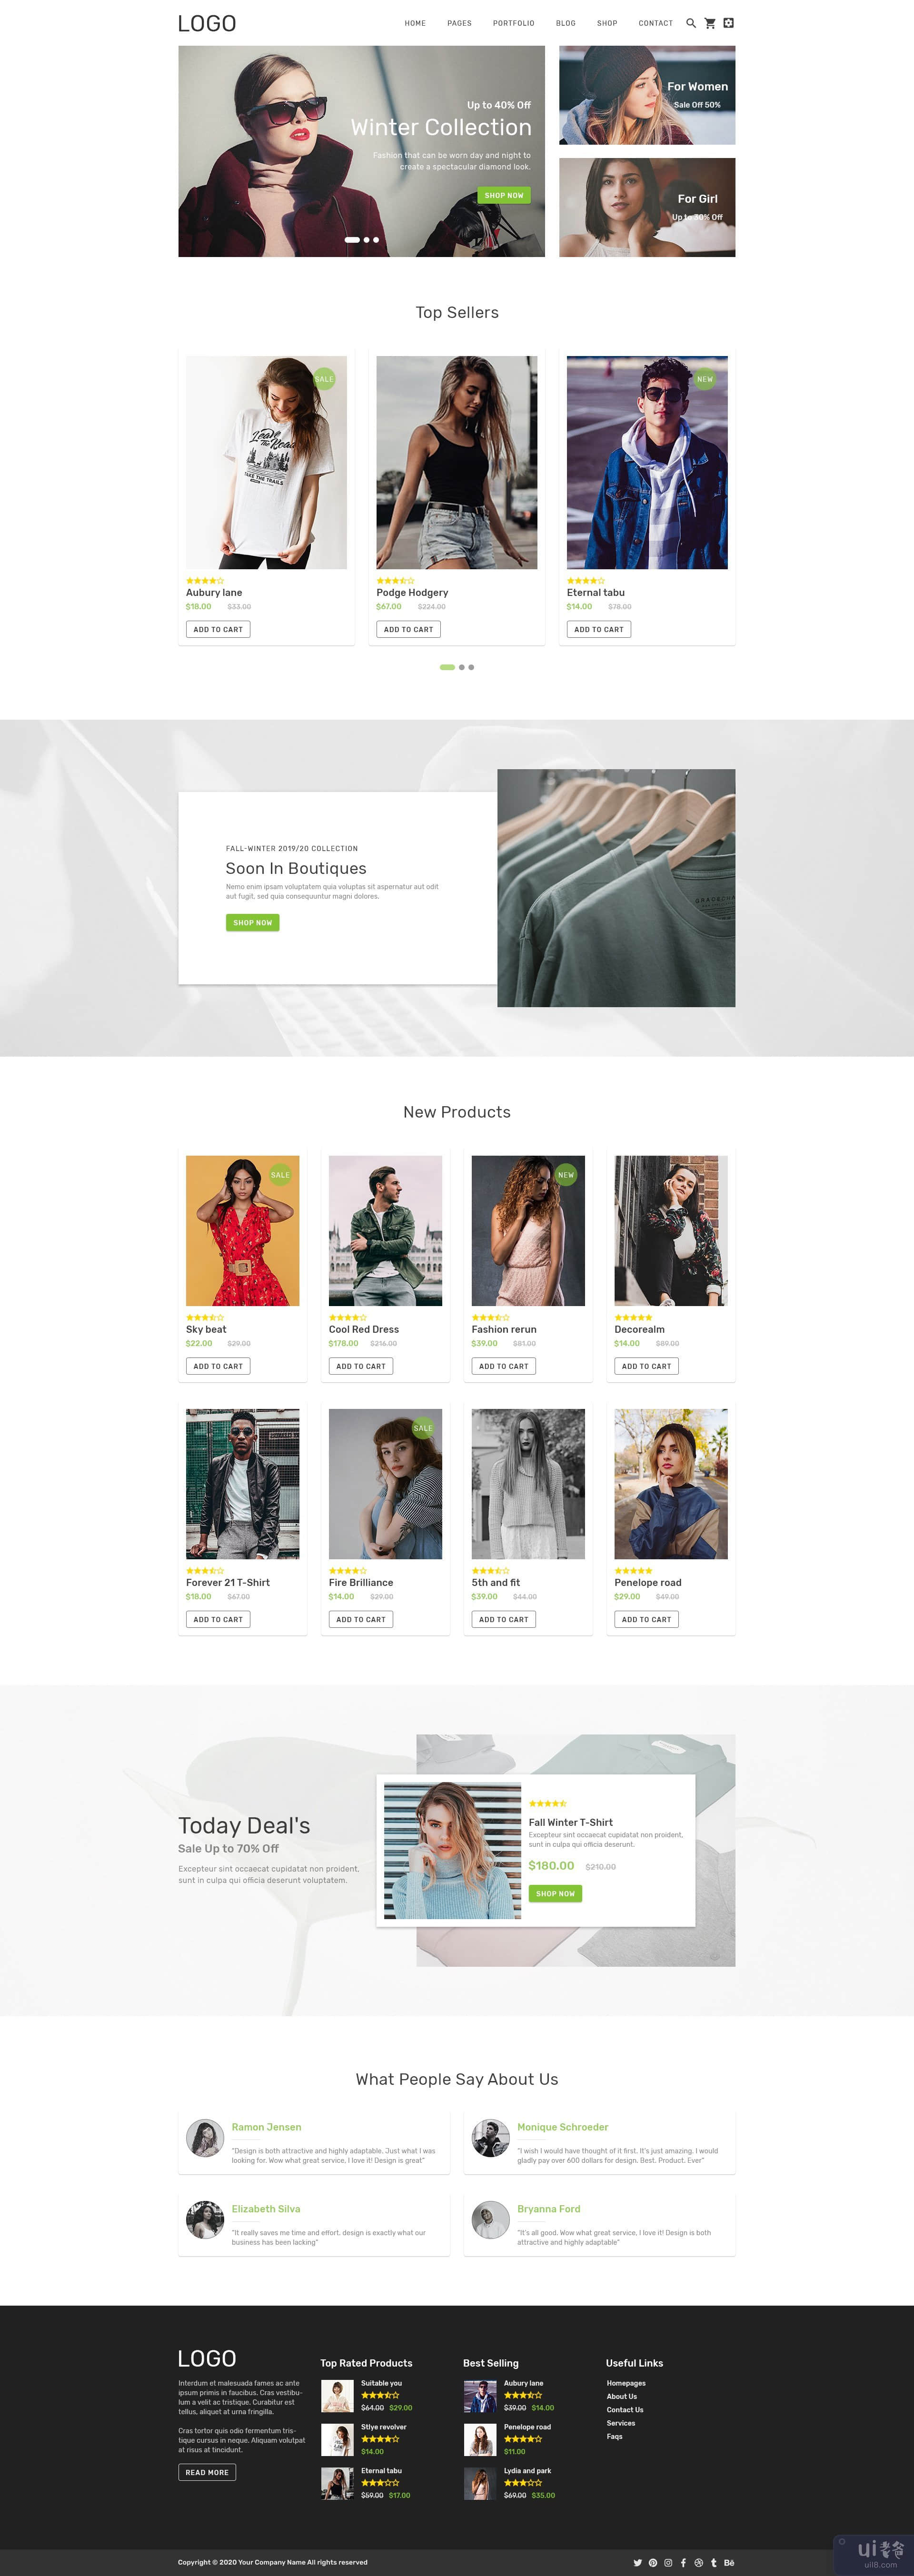 Baga 时尚商店主页 PSD Web 模板(Baga Fashion Store Homepage PSD Web Template)插图